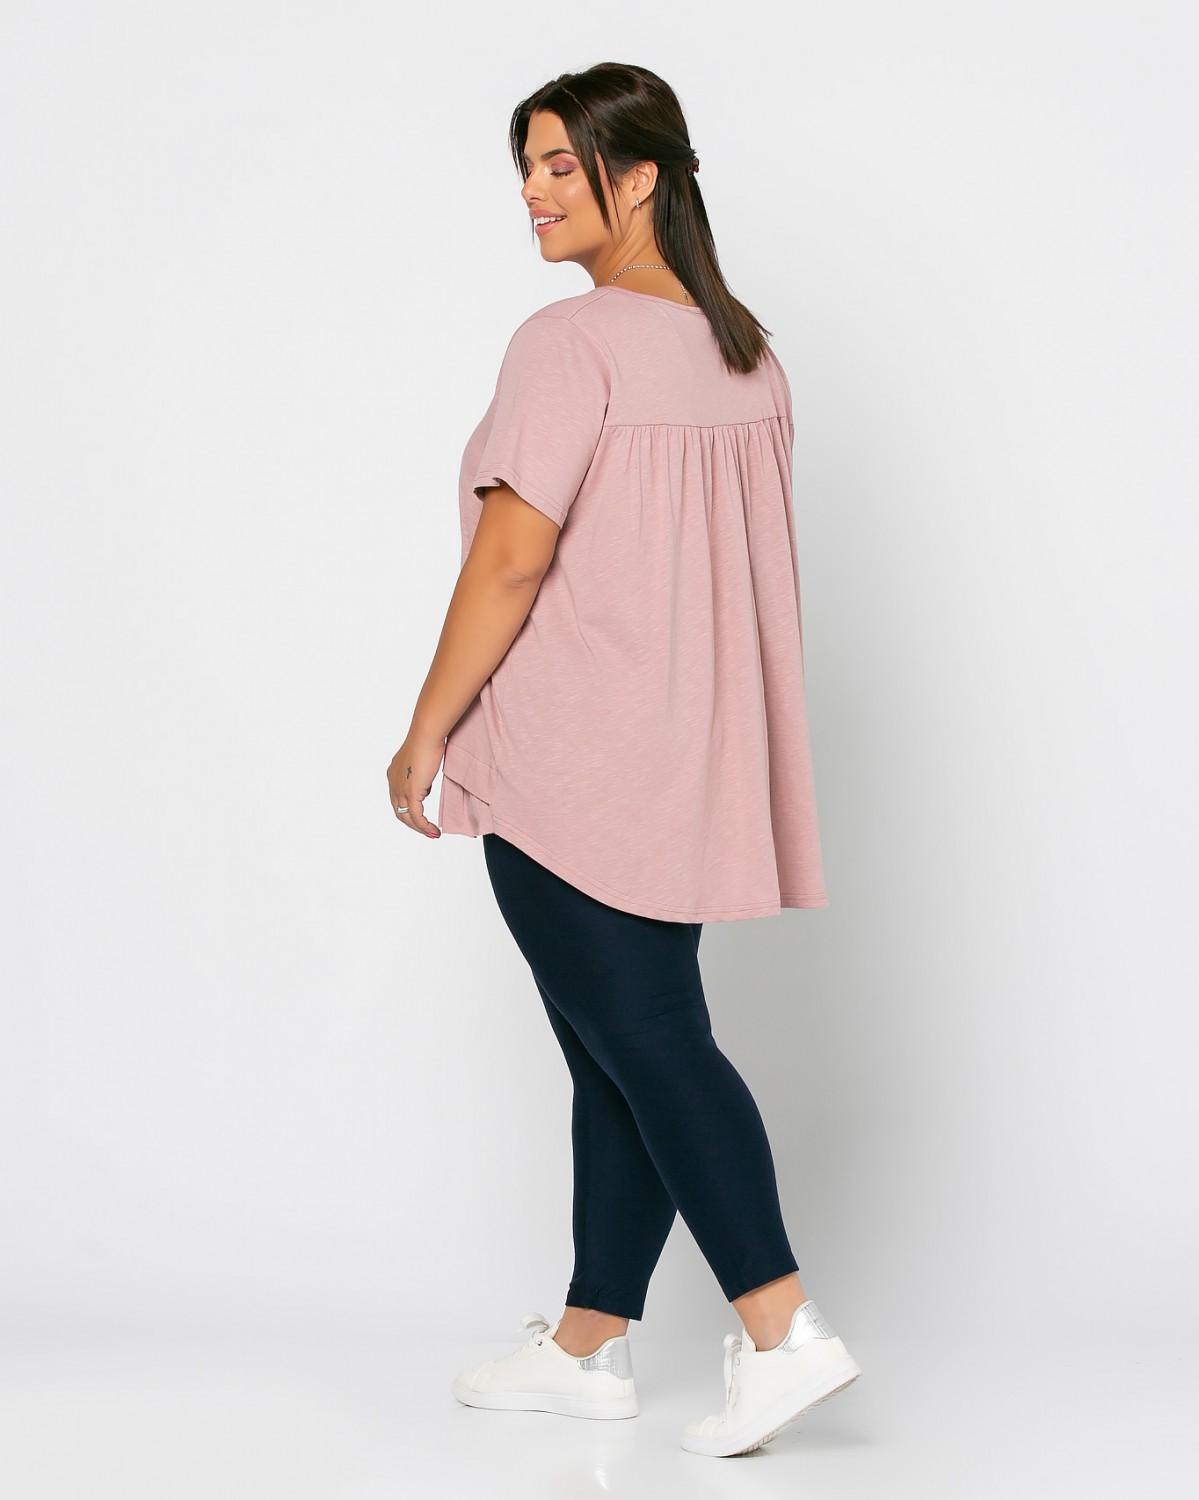 Lydia Τ-Shirt, kolor dusty pink